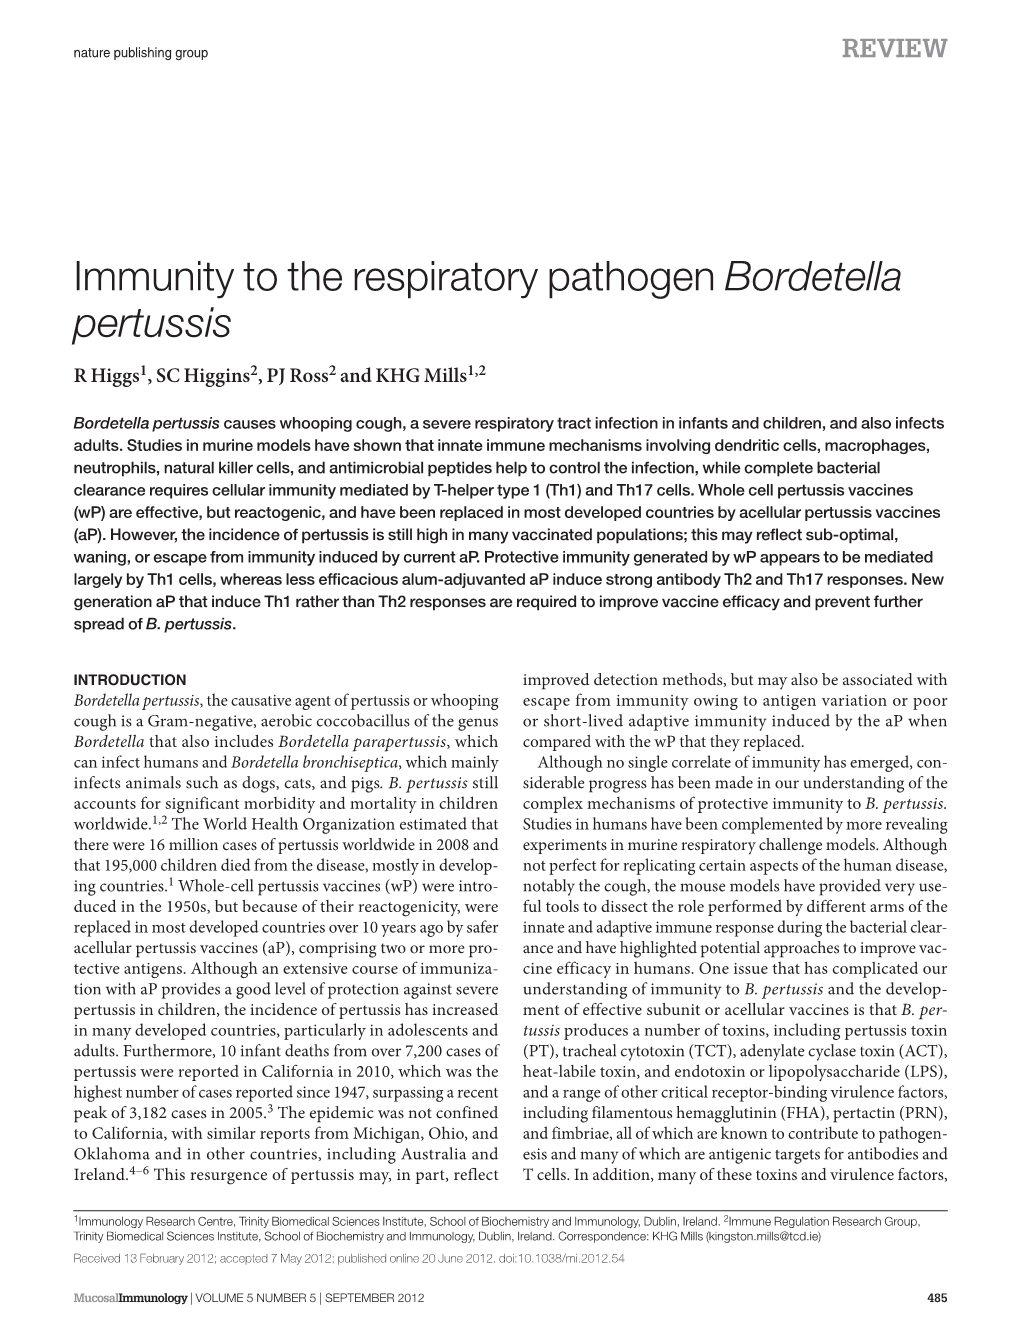 Immunity to the Respiratory Pathogen Bordetella Pertussis